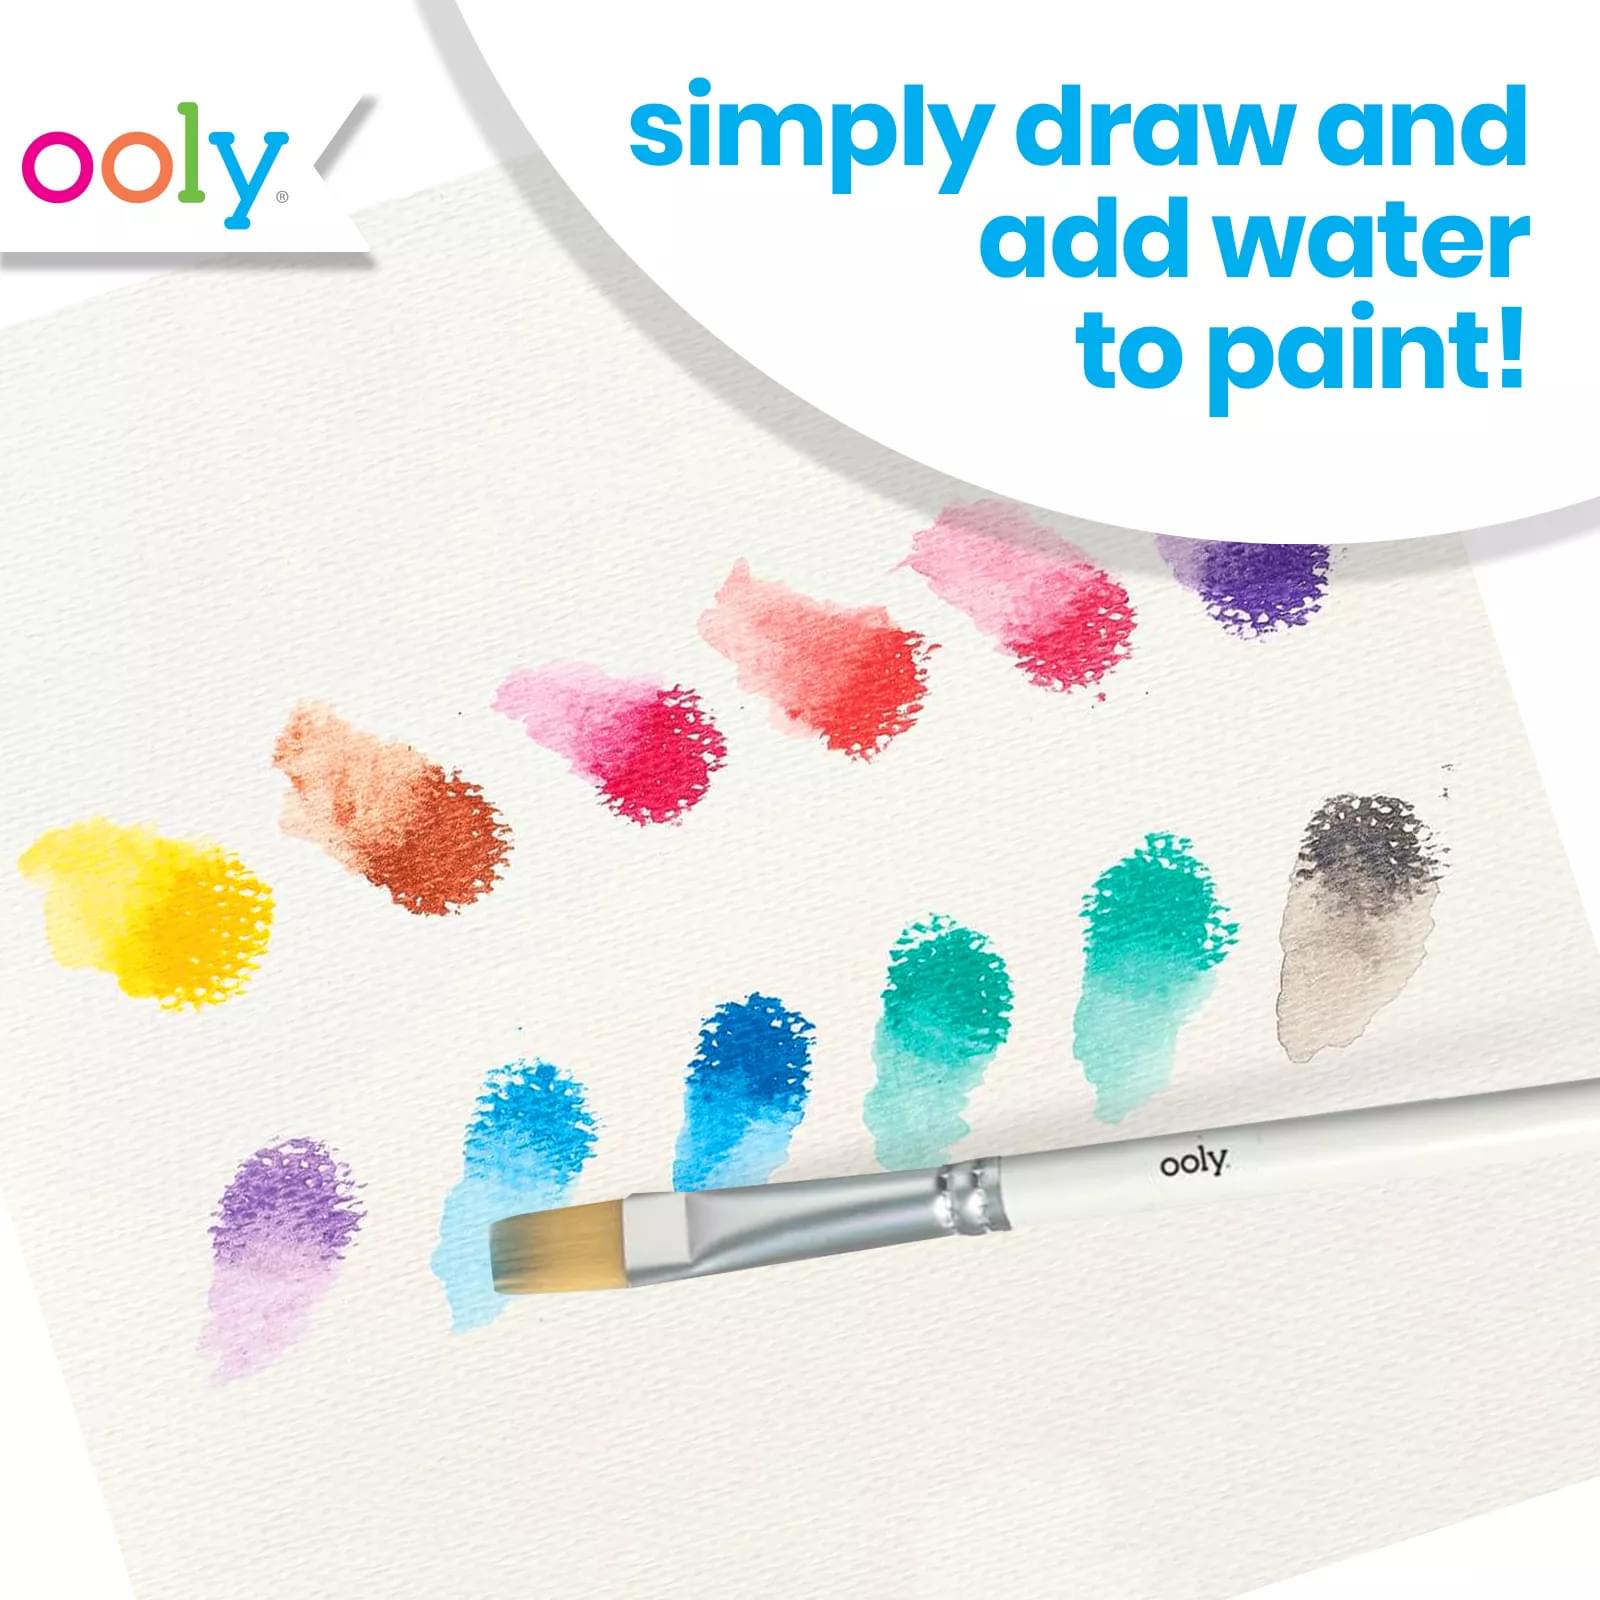 OOLY Smooth Stix Watercolor Gel Crayons 